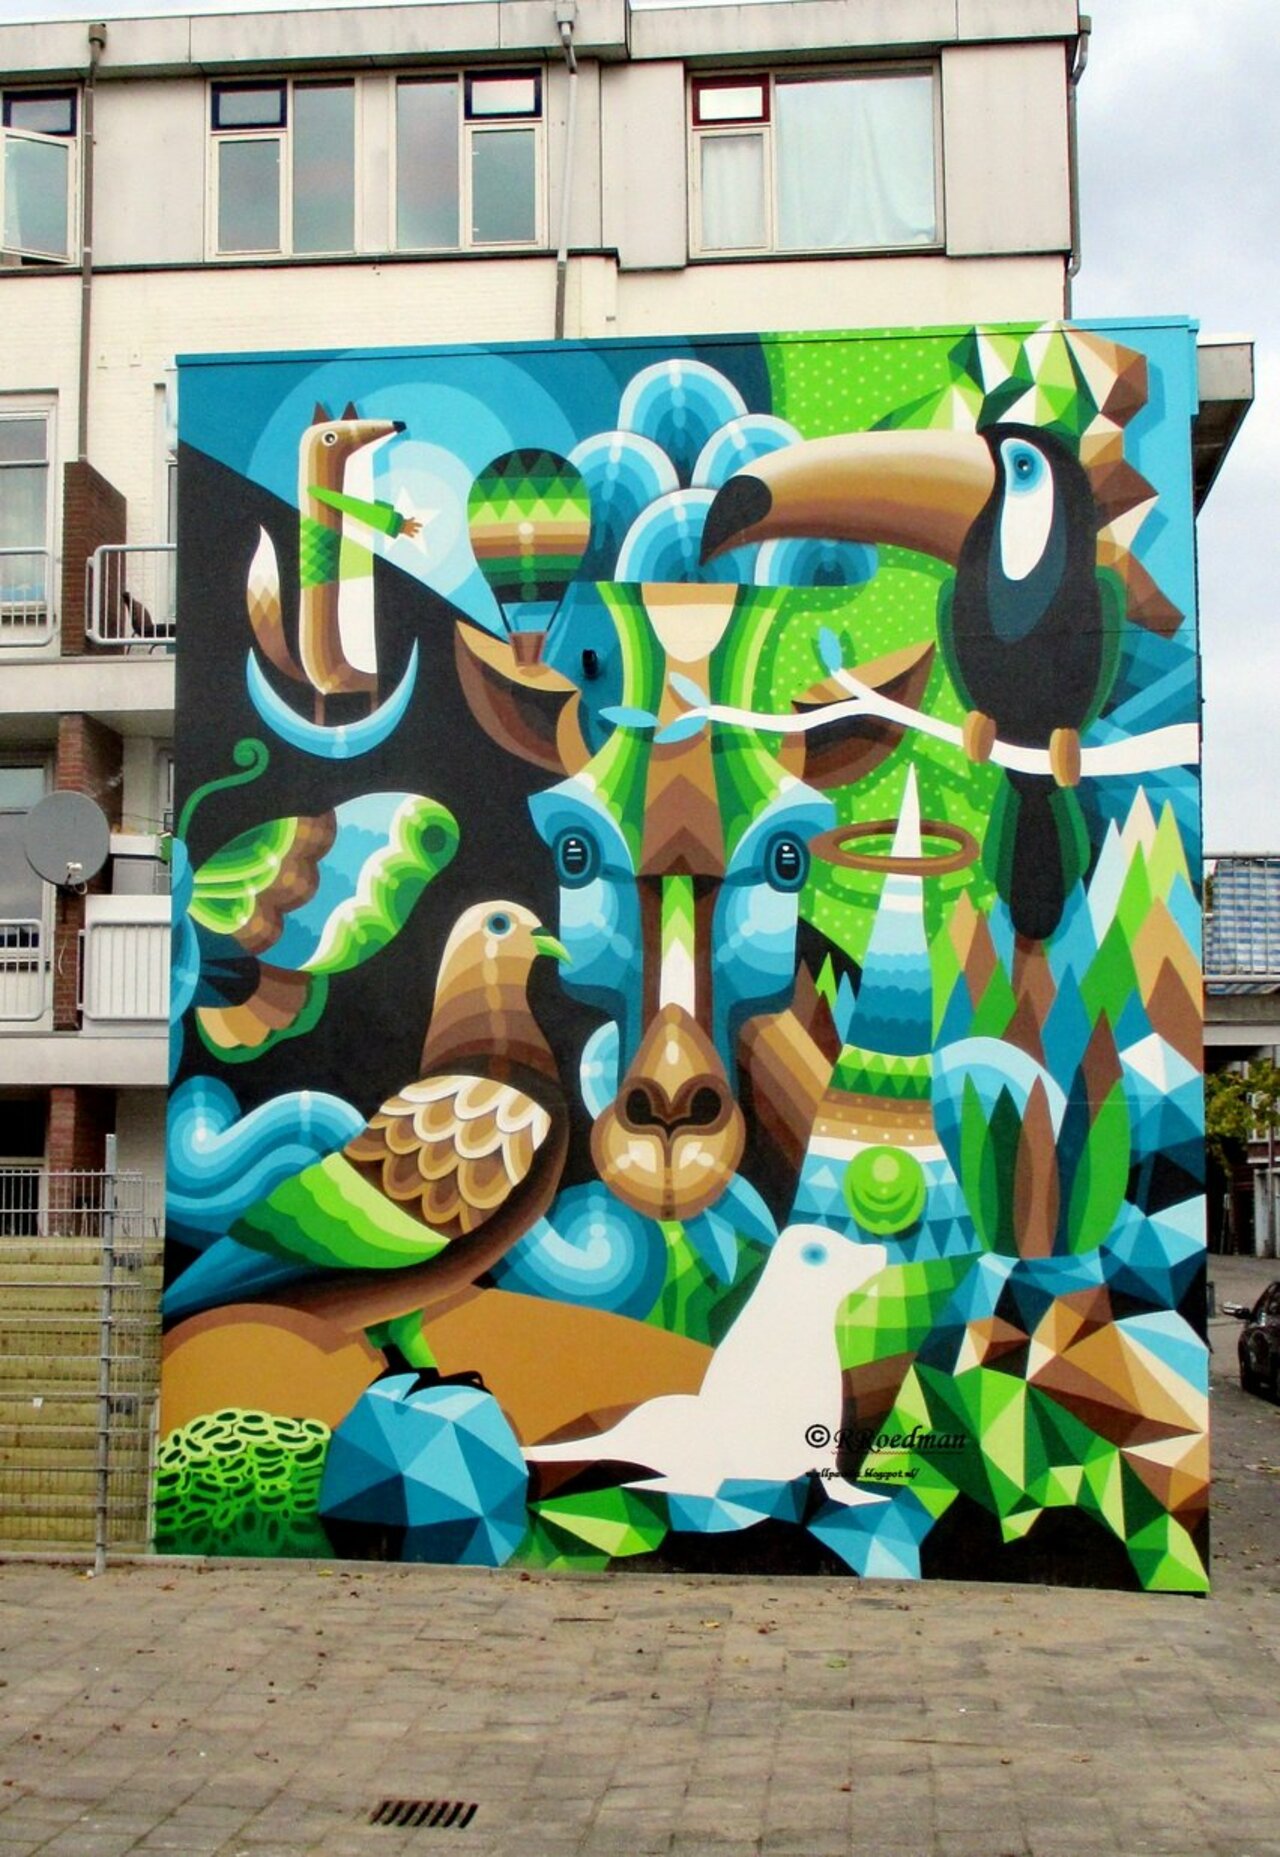 http://ift.tt/1LC4vWe http://ift.tt/1LC4vWe RT RRoedman: #streetart #graffiti #mural nice work from #EelcoVa… https://t.co/UkkMN05xhM